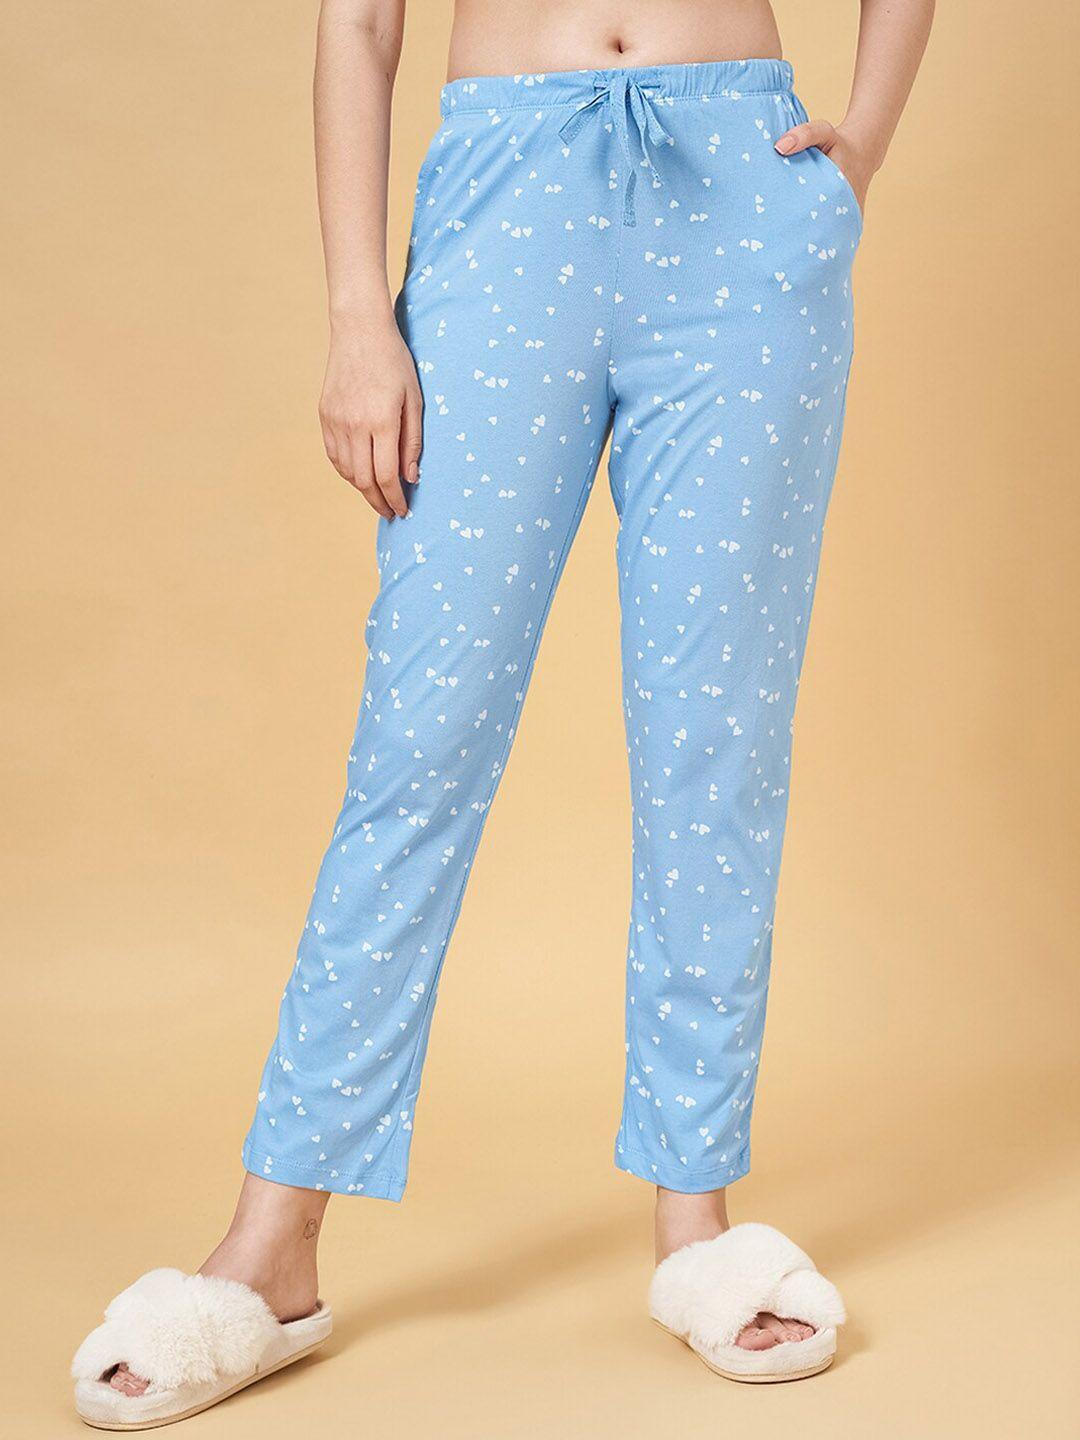 dreamz by pantaloons women conversational printed mid-rise cotton lounge pant